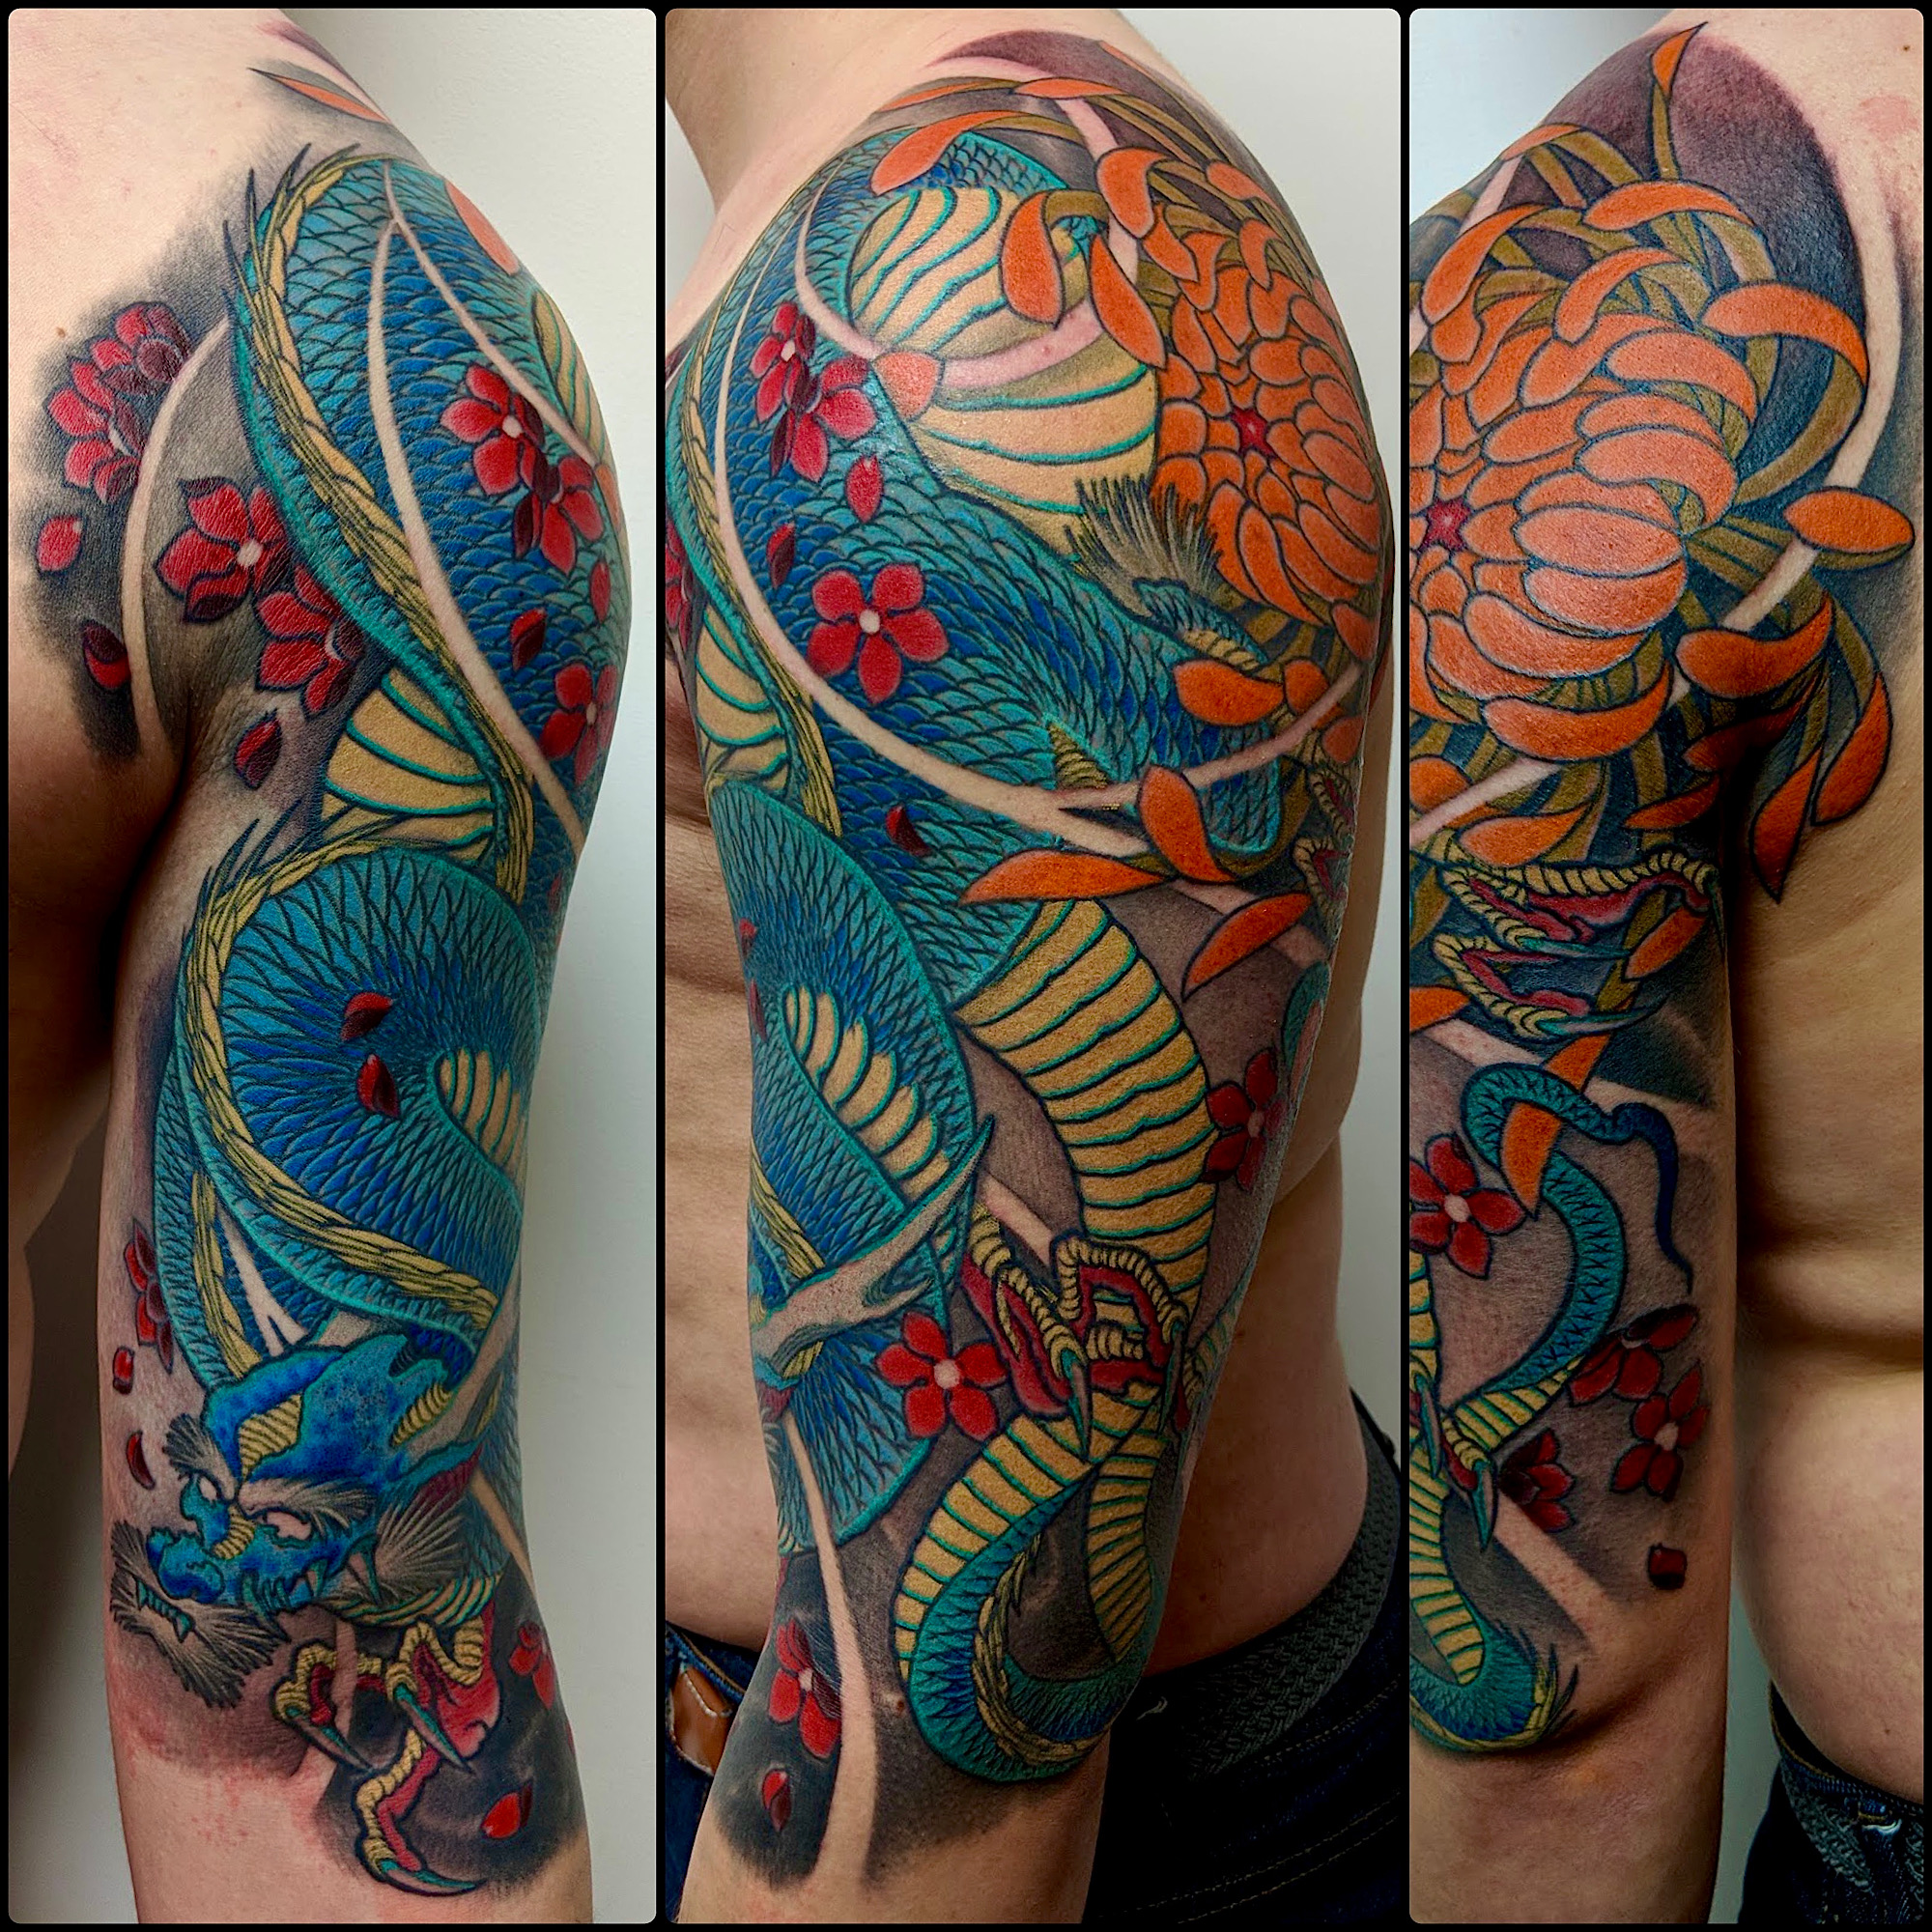 Neo Japanese tattoo colour irezumi oriental blue dragon ryu peony cherry blossom by ricks custom tattooing Ricardo Pedro at nexus collective